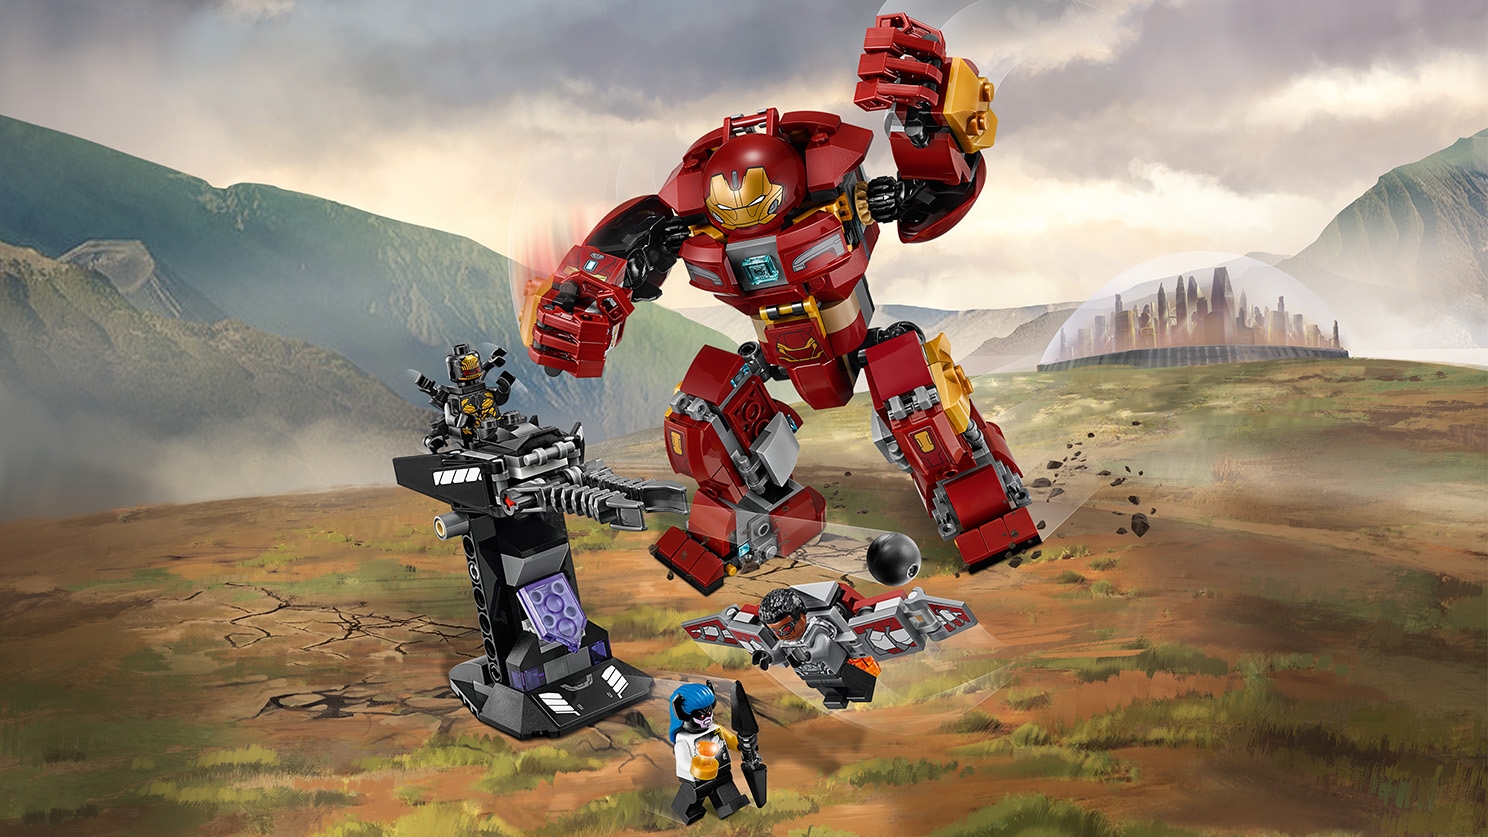 Authentic New Proxima Midnight Minifig Lego Marvel 76104 Infinity War Villain